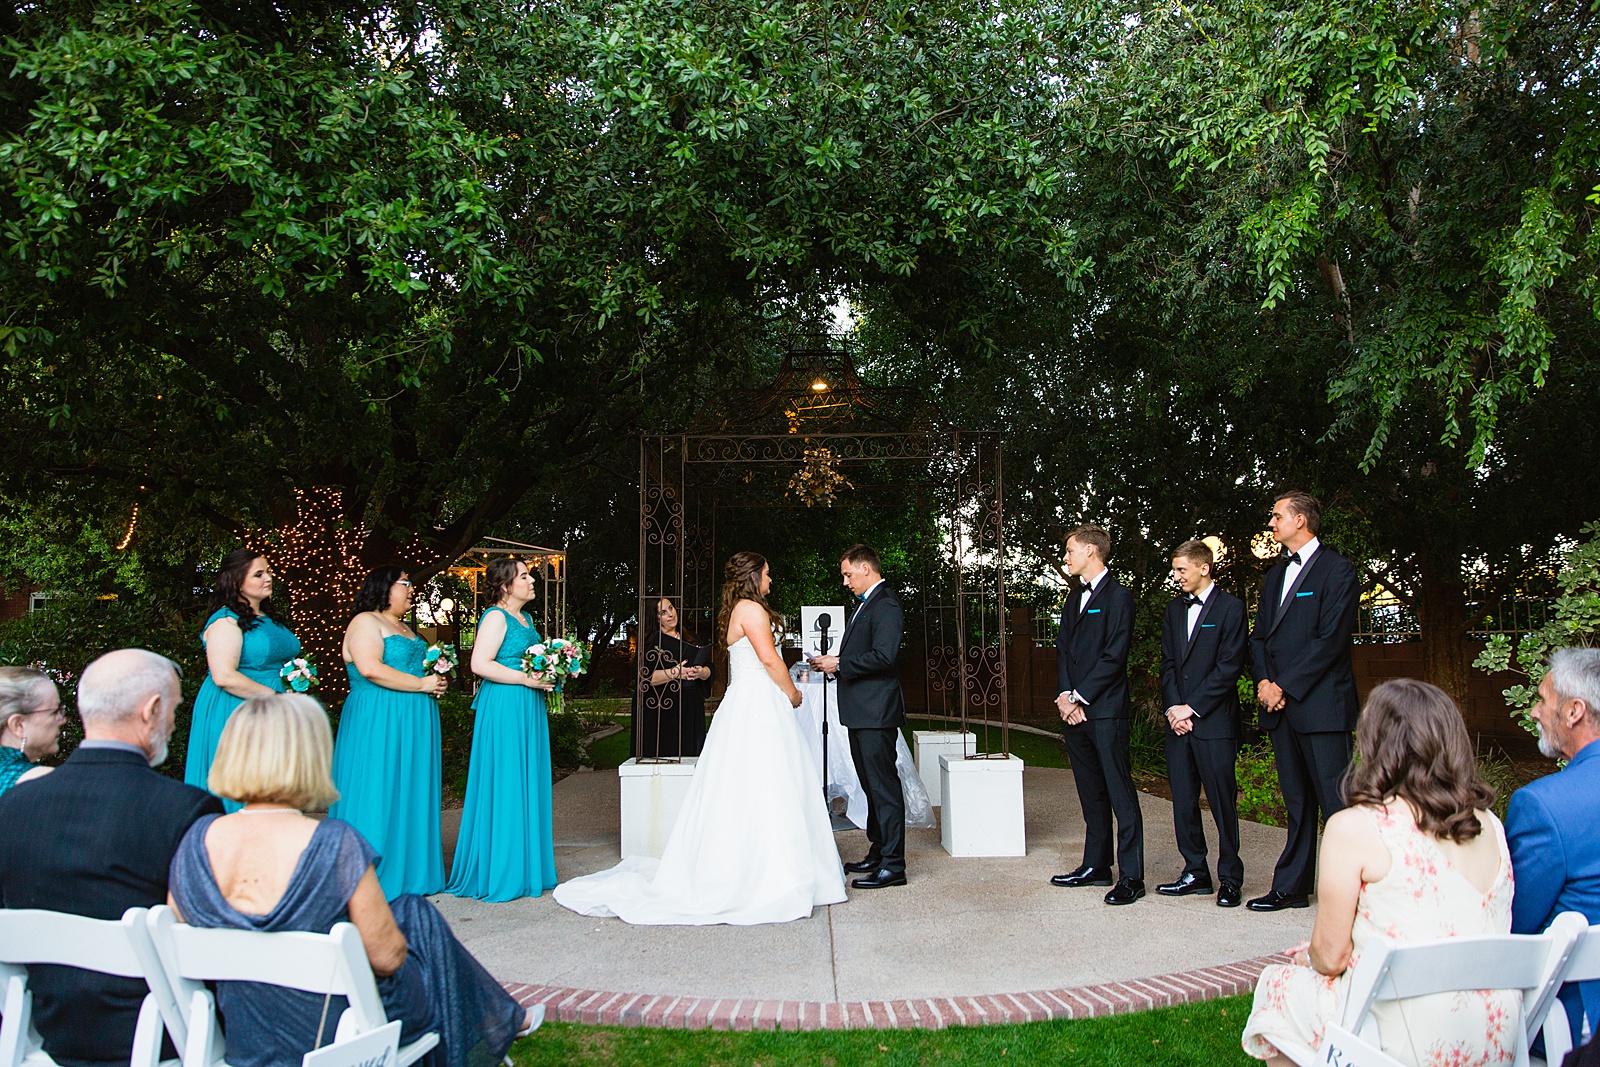 Wedding ceremony at Stonebridge Manor by Phoenix wedding photographer PMA Photography.